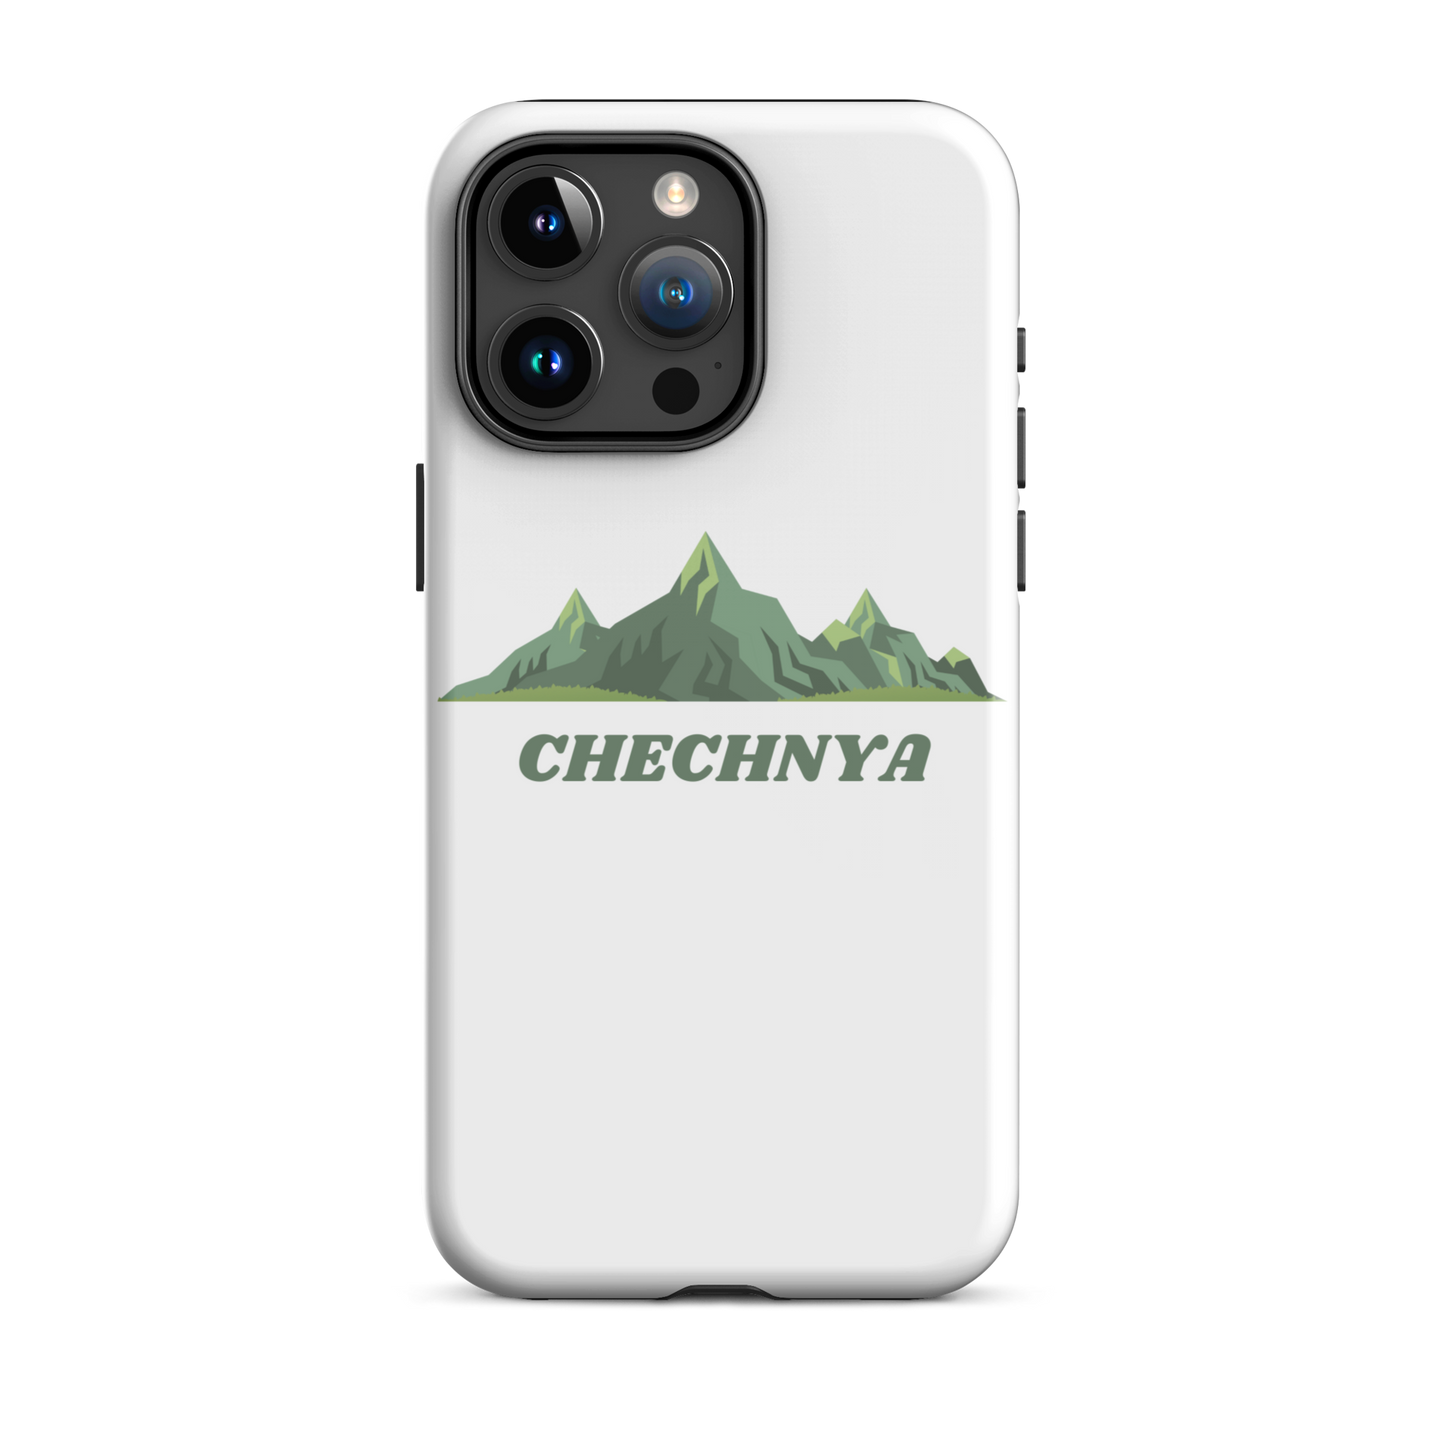 CHECHNYA - White